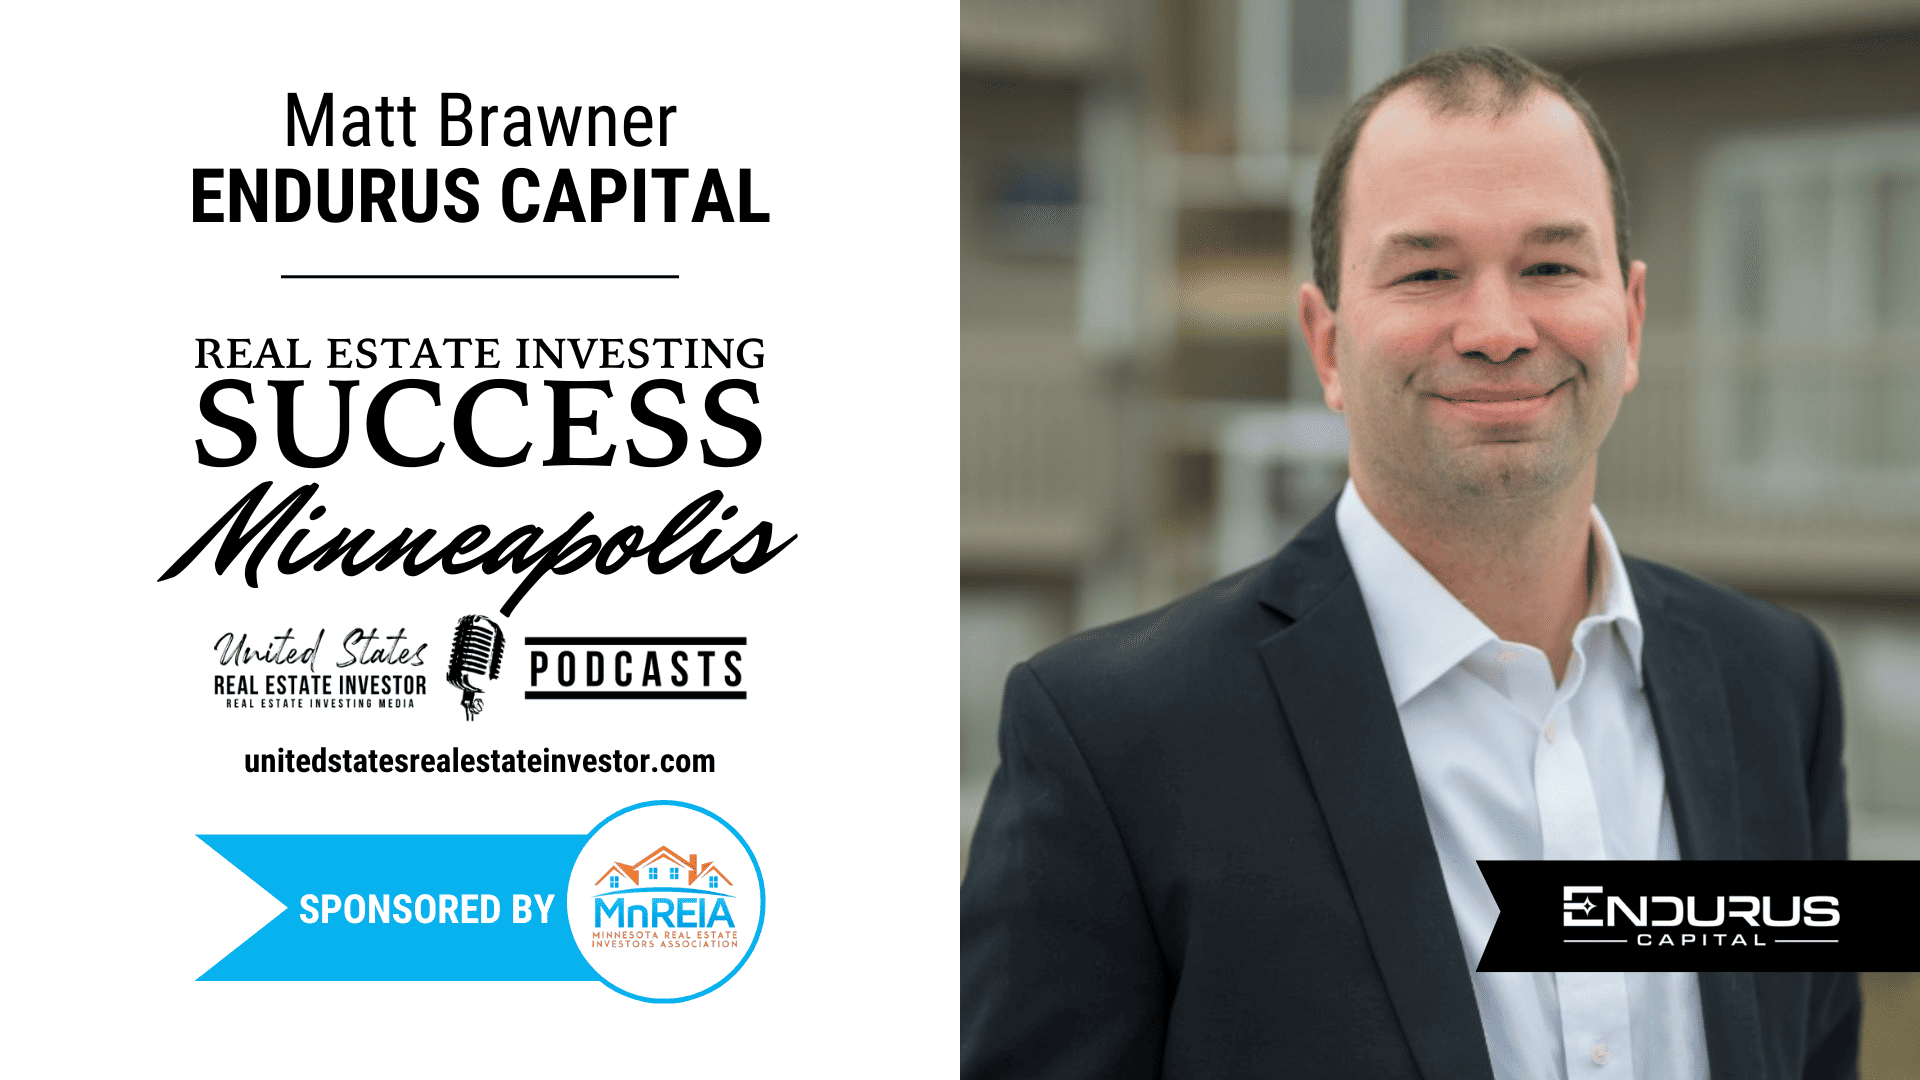 Real Estate Investing Success Minneapolis with Matt Brawner of Endurus Capital